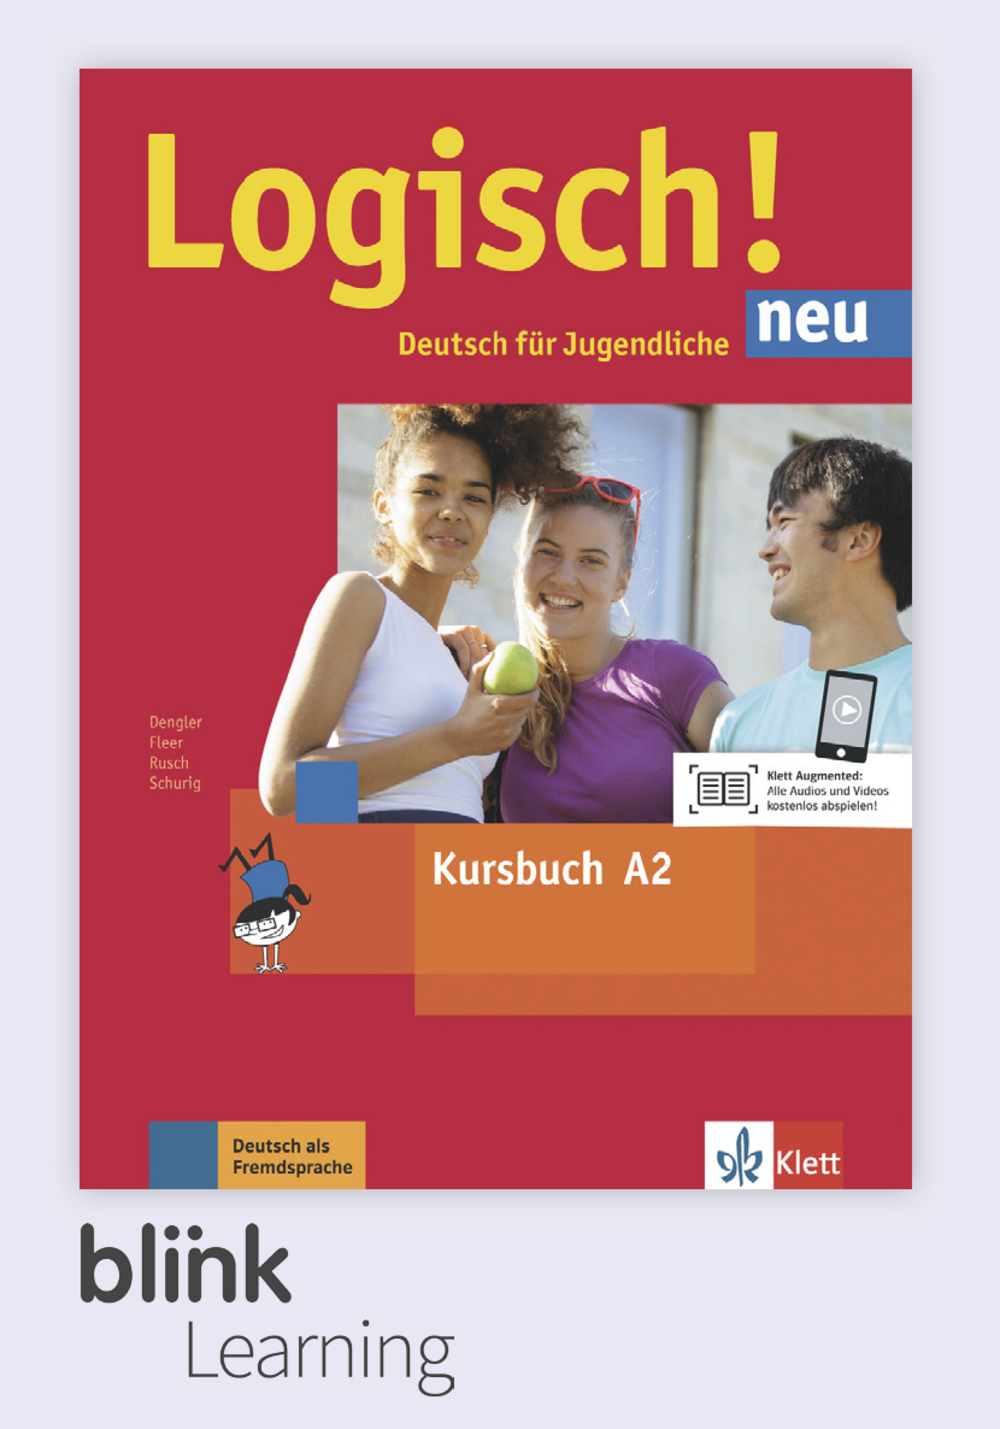 Logisch! NEU A2 Digital Kursbuch für Lernende / Цифровой учебник для ученика